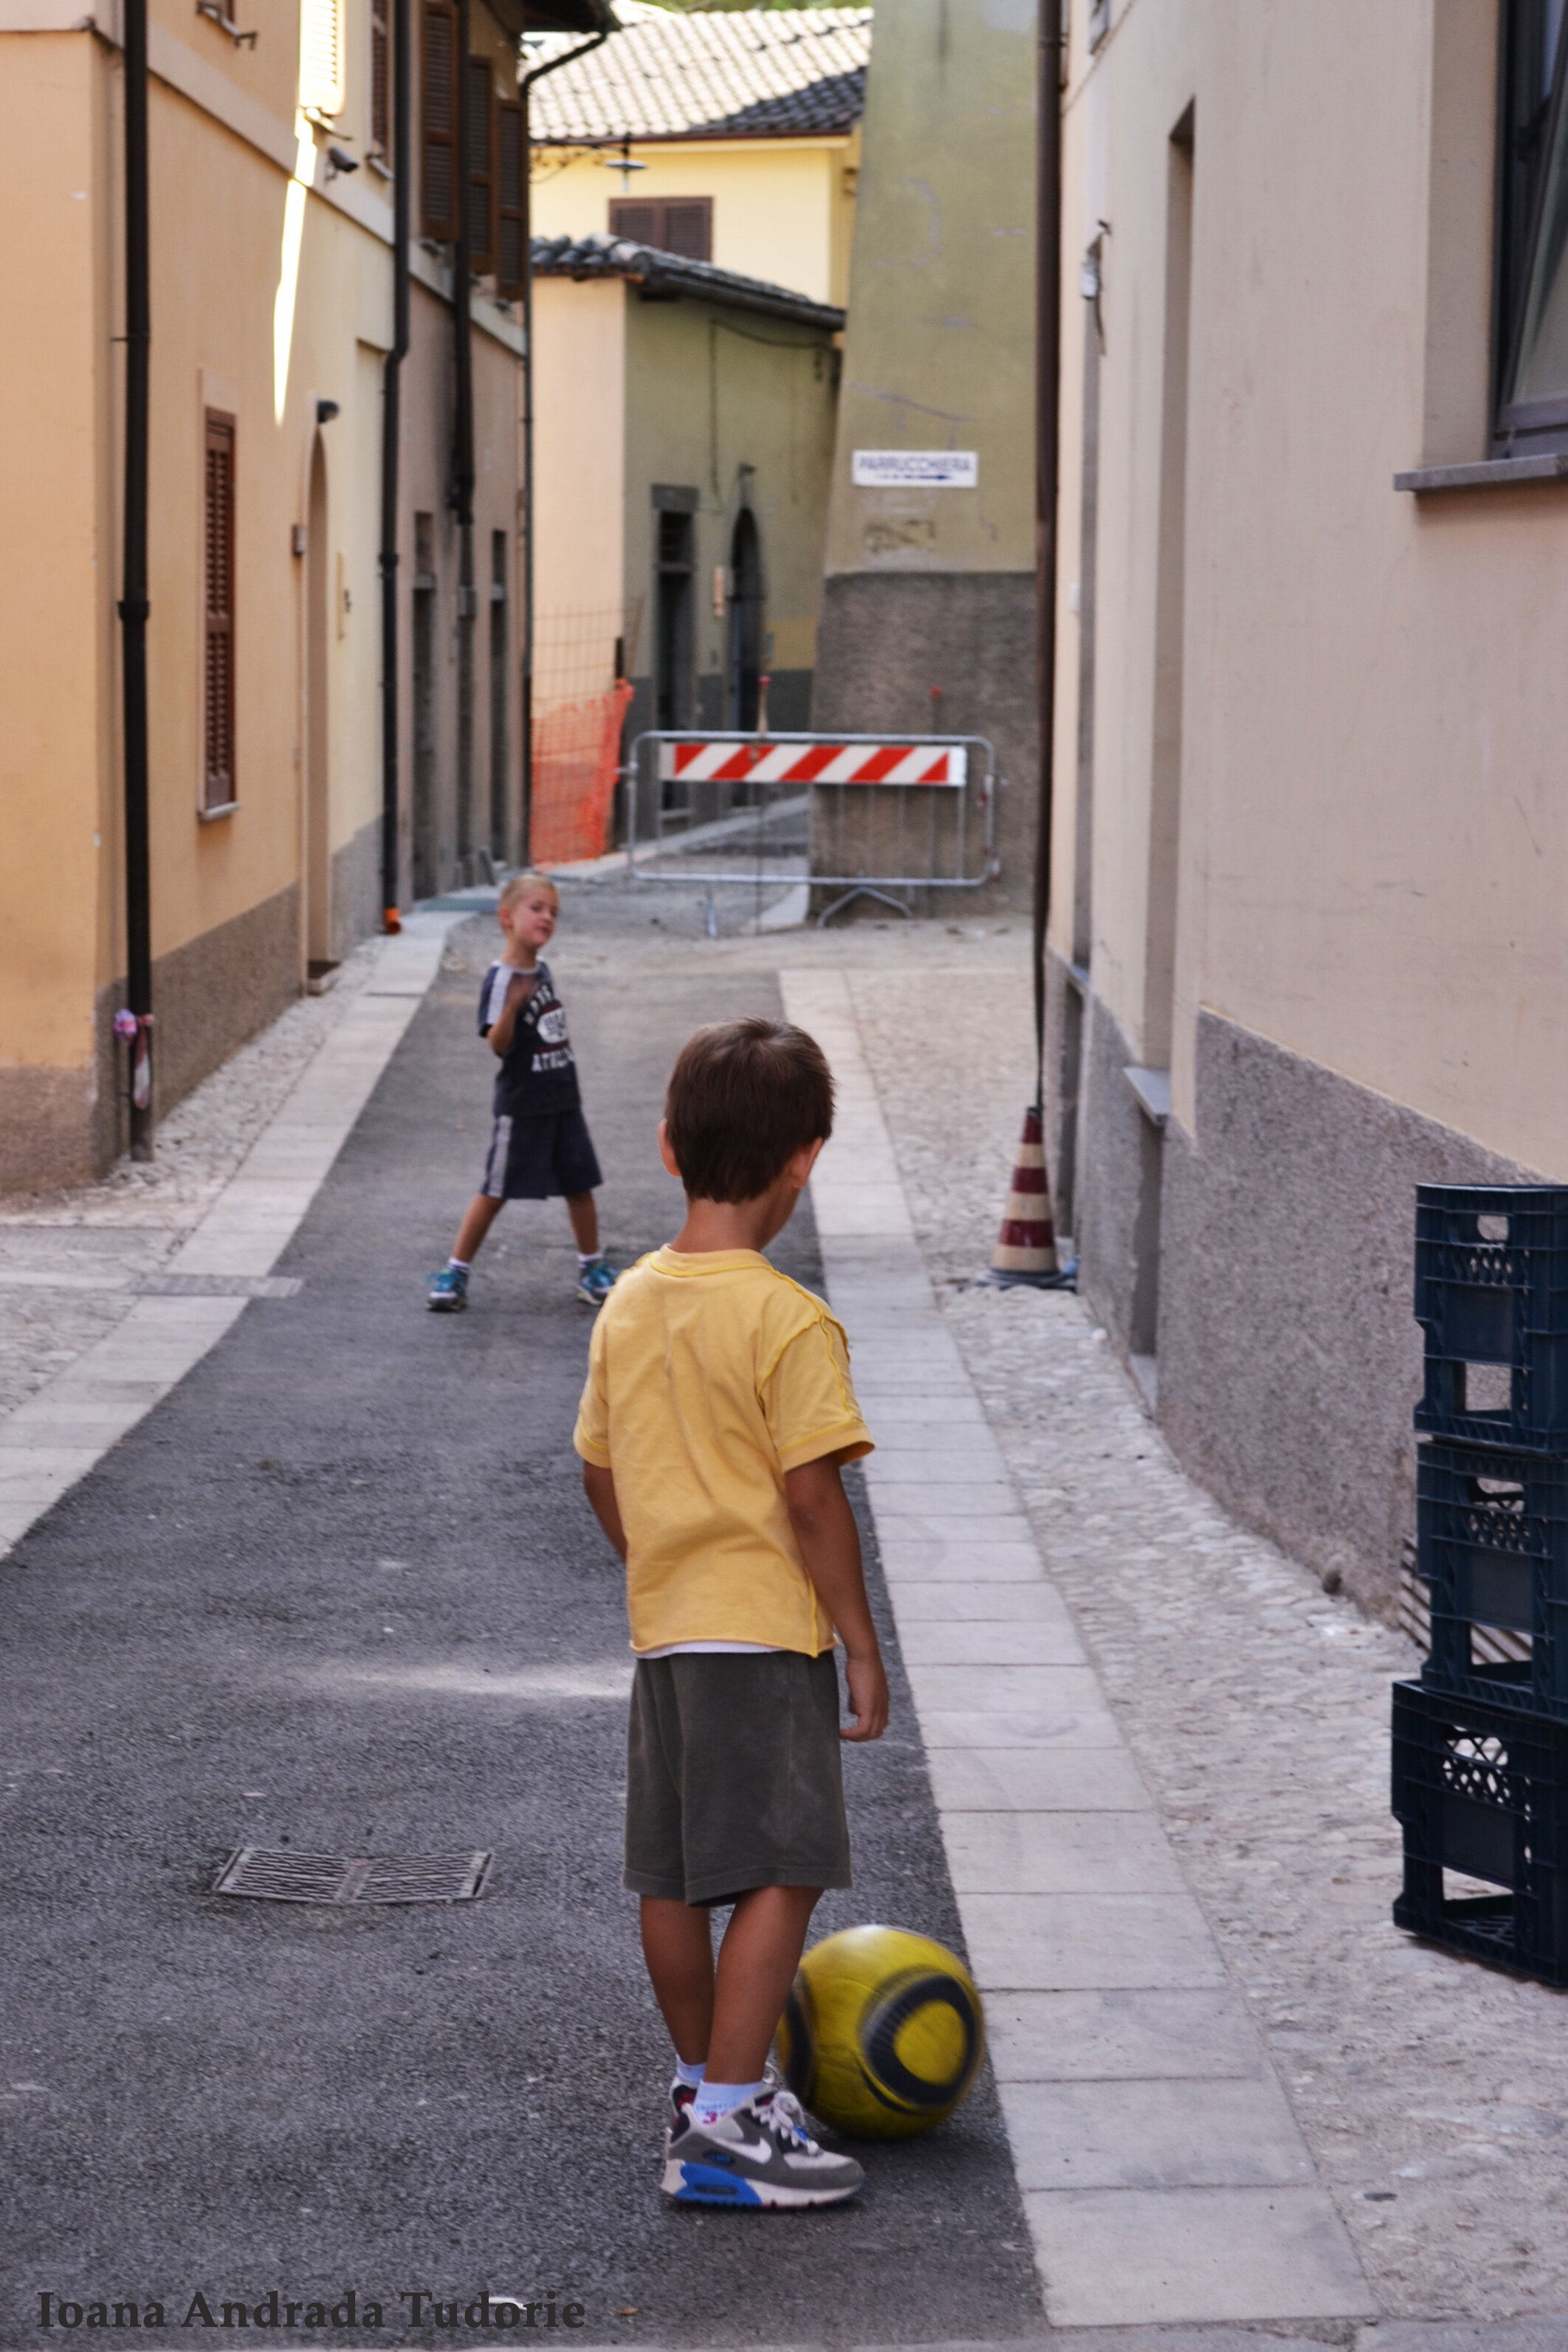  Orvieto, Italy, August 2011 